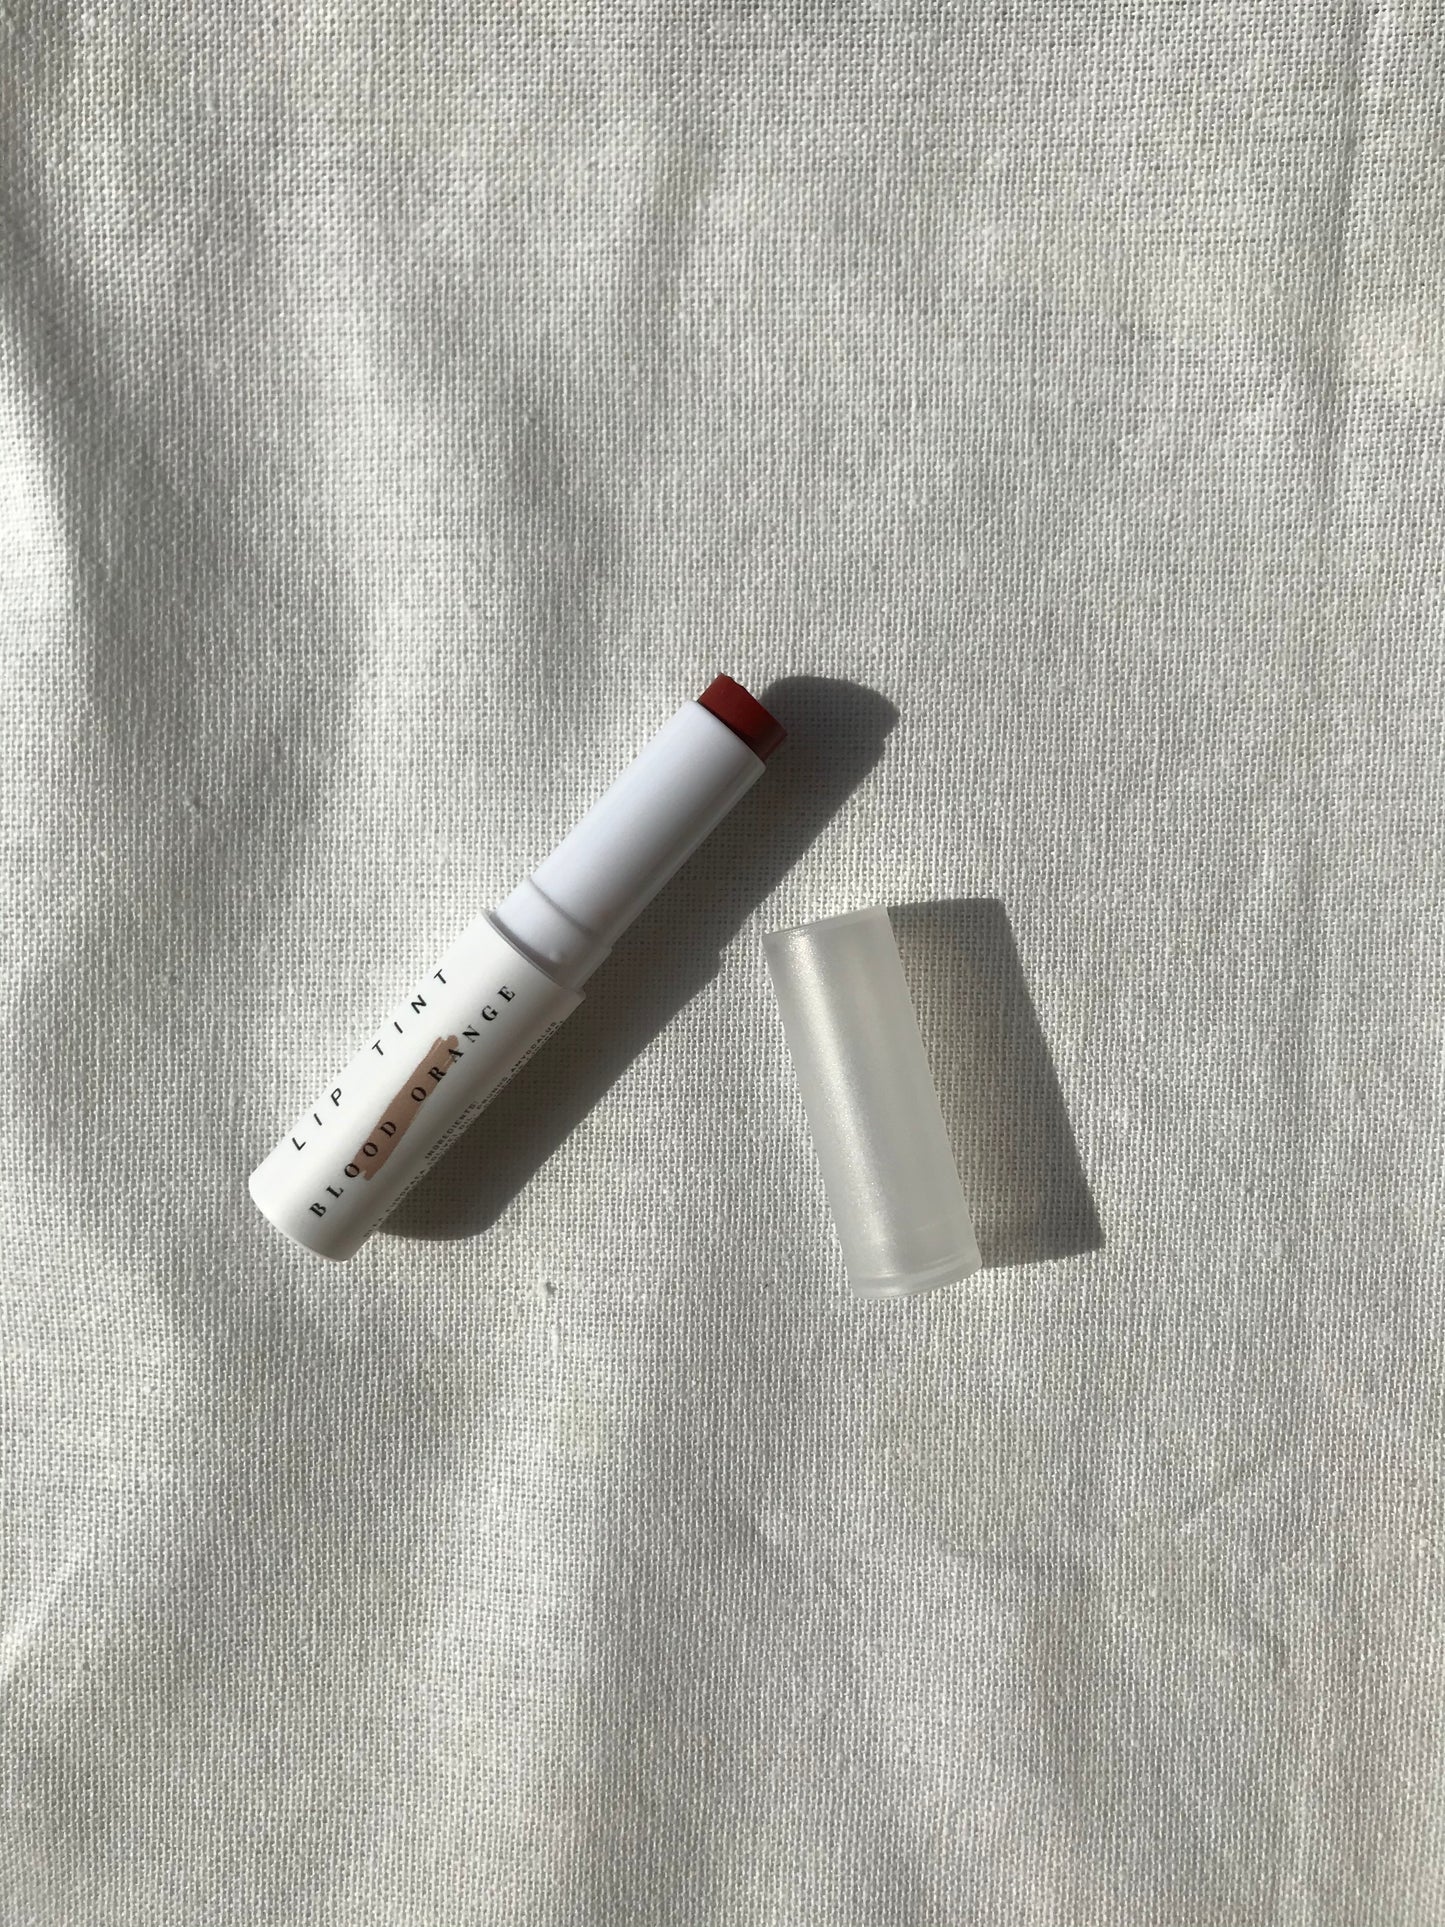 Blood Orange | Natural Lip Tint + Cheek